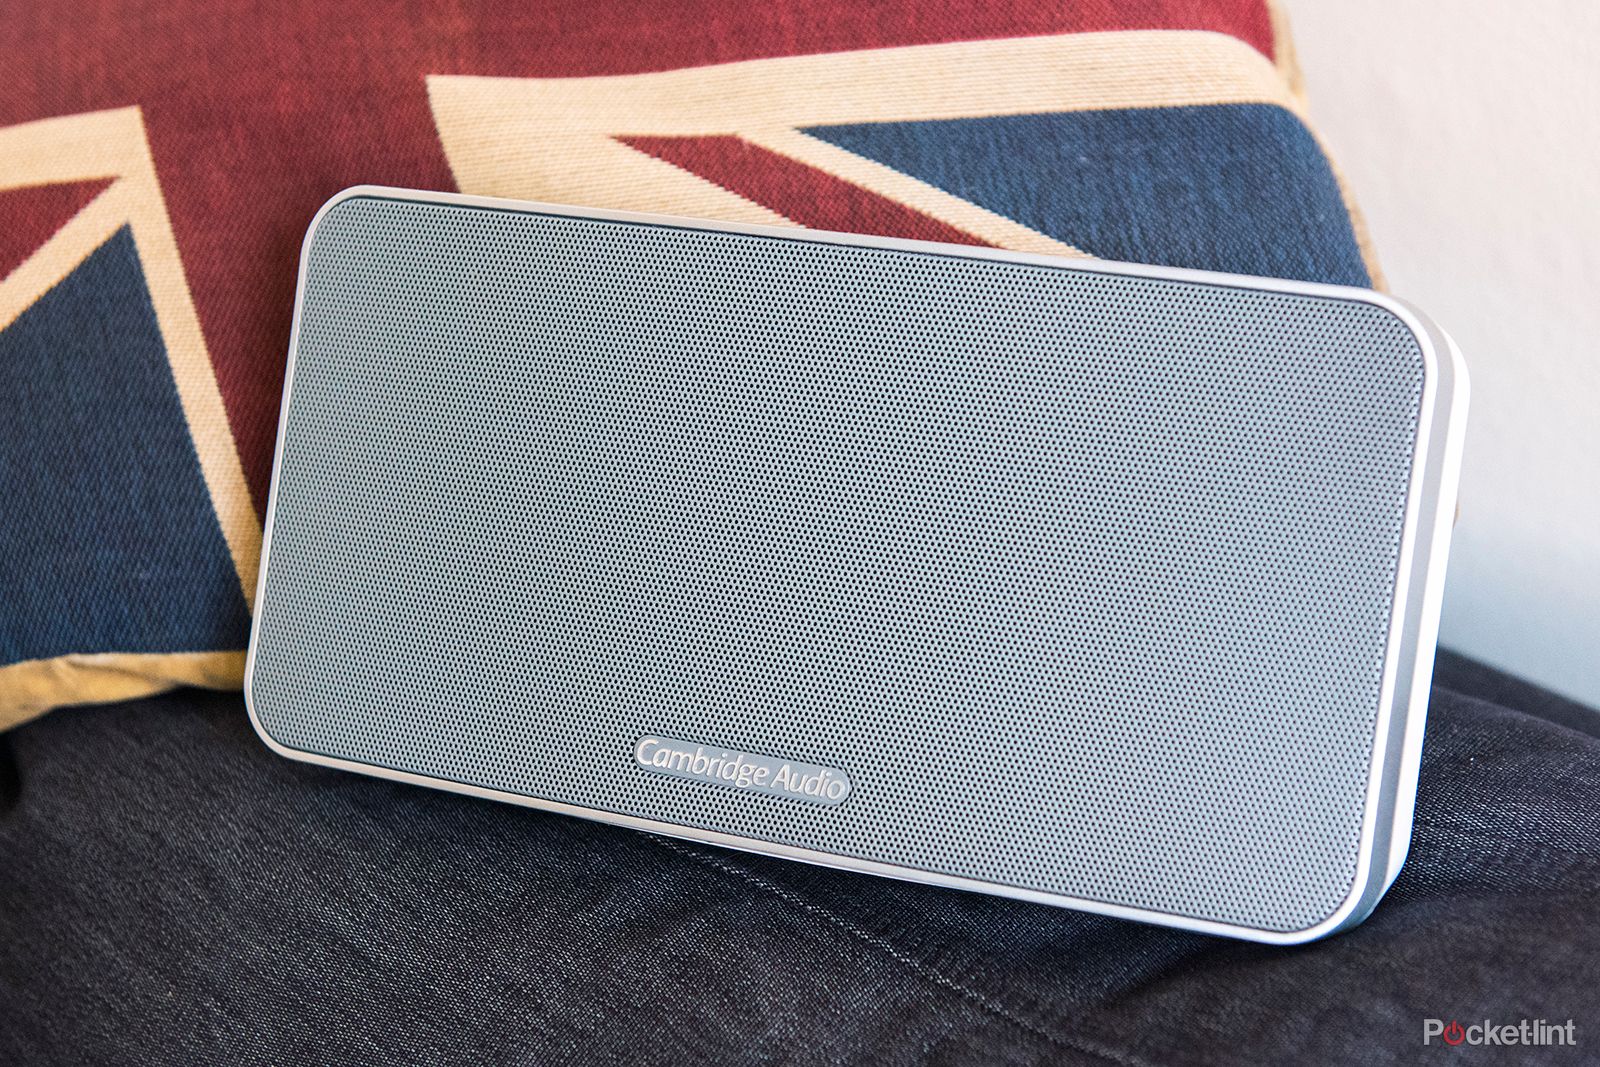 cambridge audio go v2 portable speaker review image 1